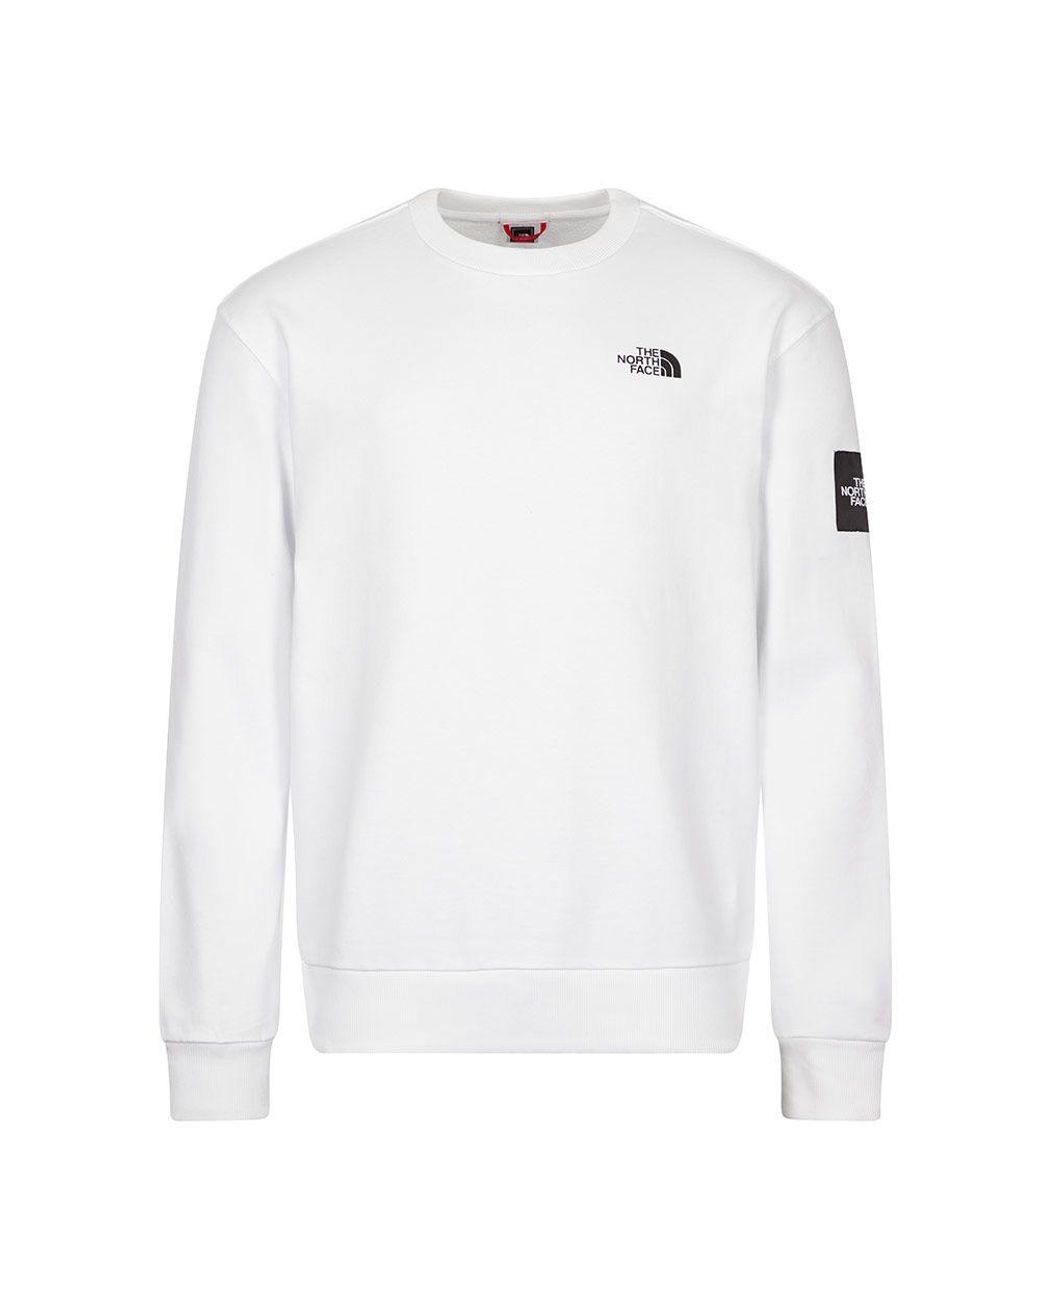 The North Face Sweatshirt Black Box - White for Men - Lyst